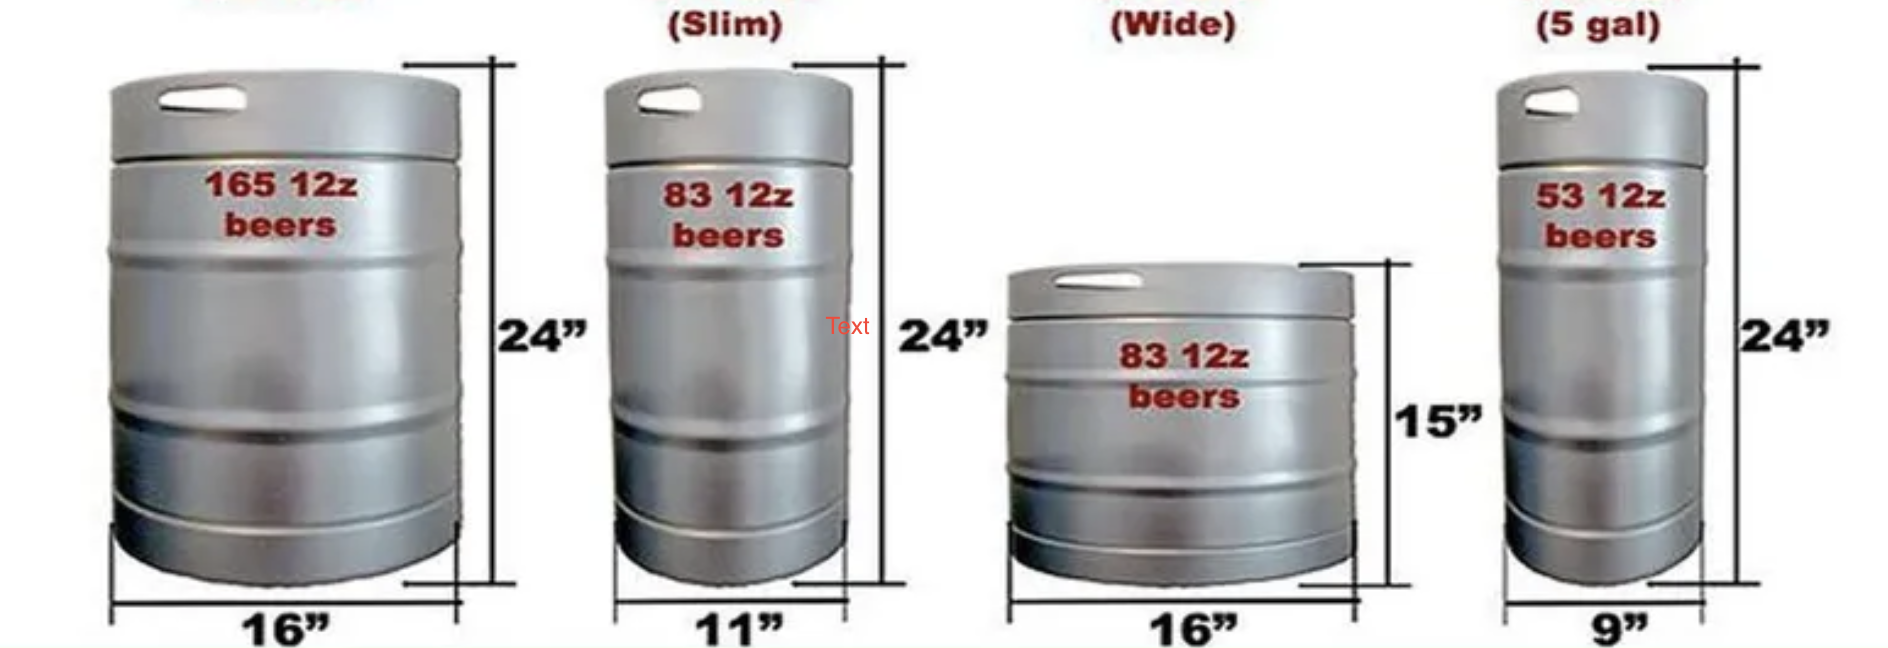 Размеры литра масла